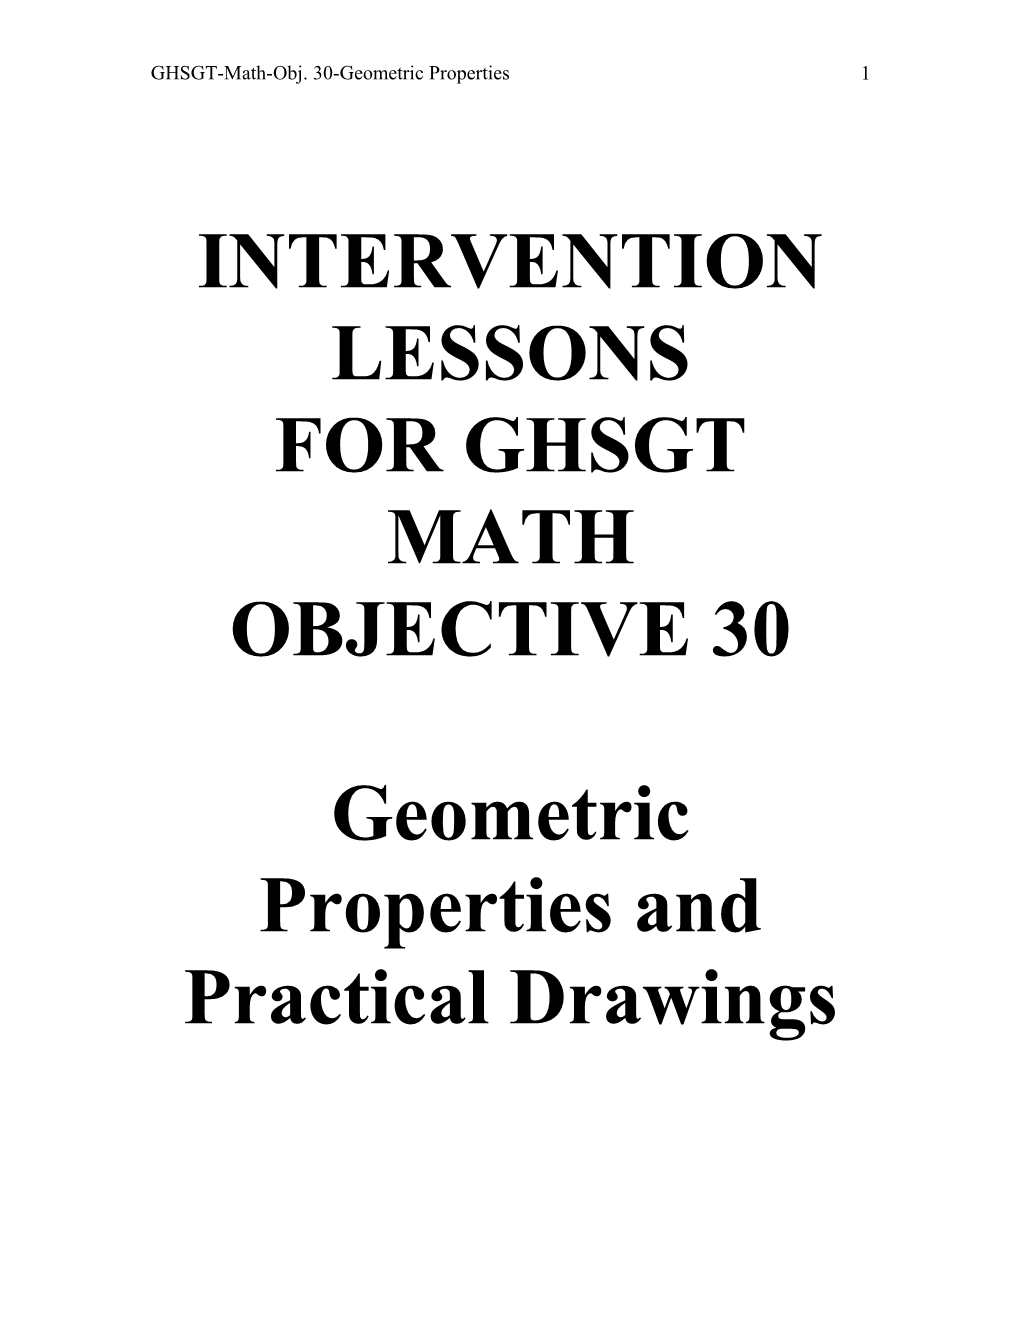 Geometric Properties and Practical Drawings